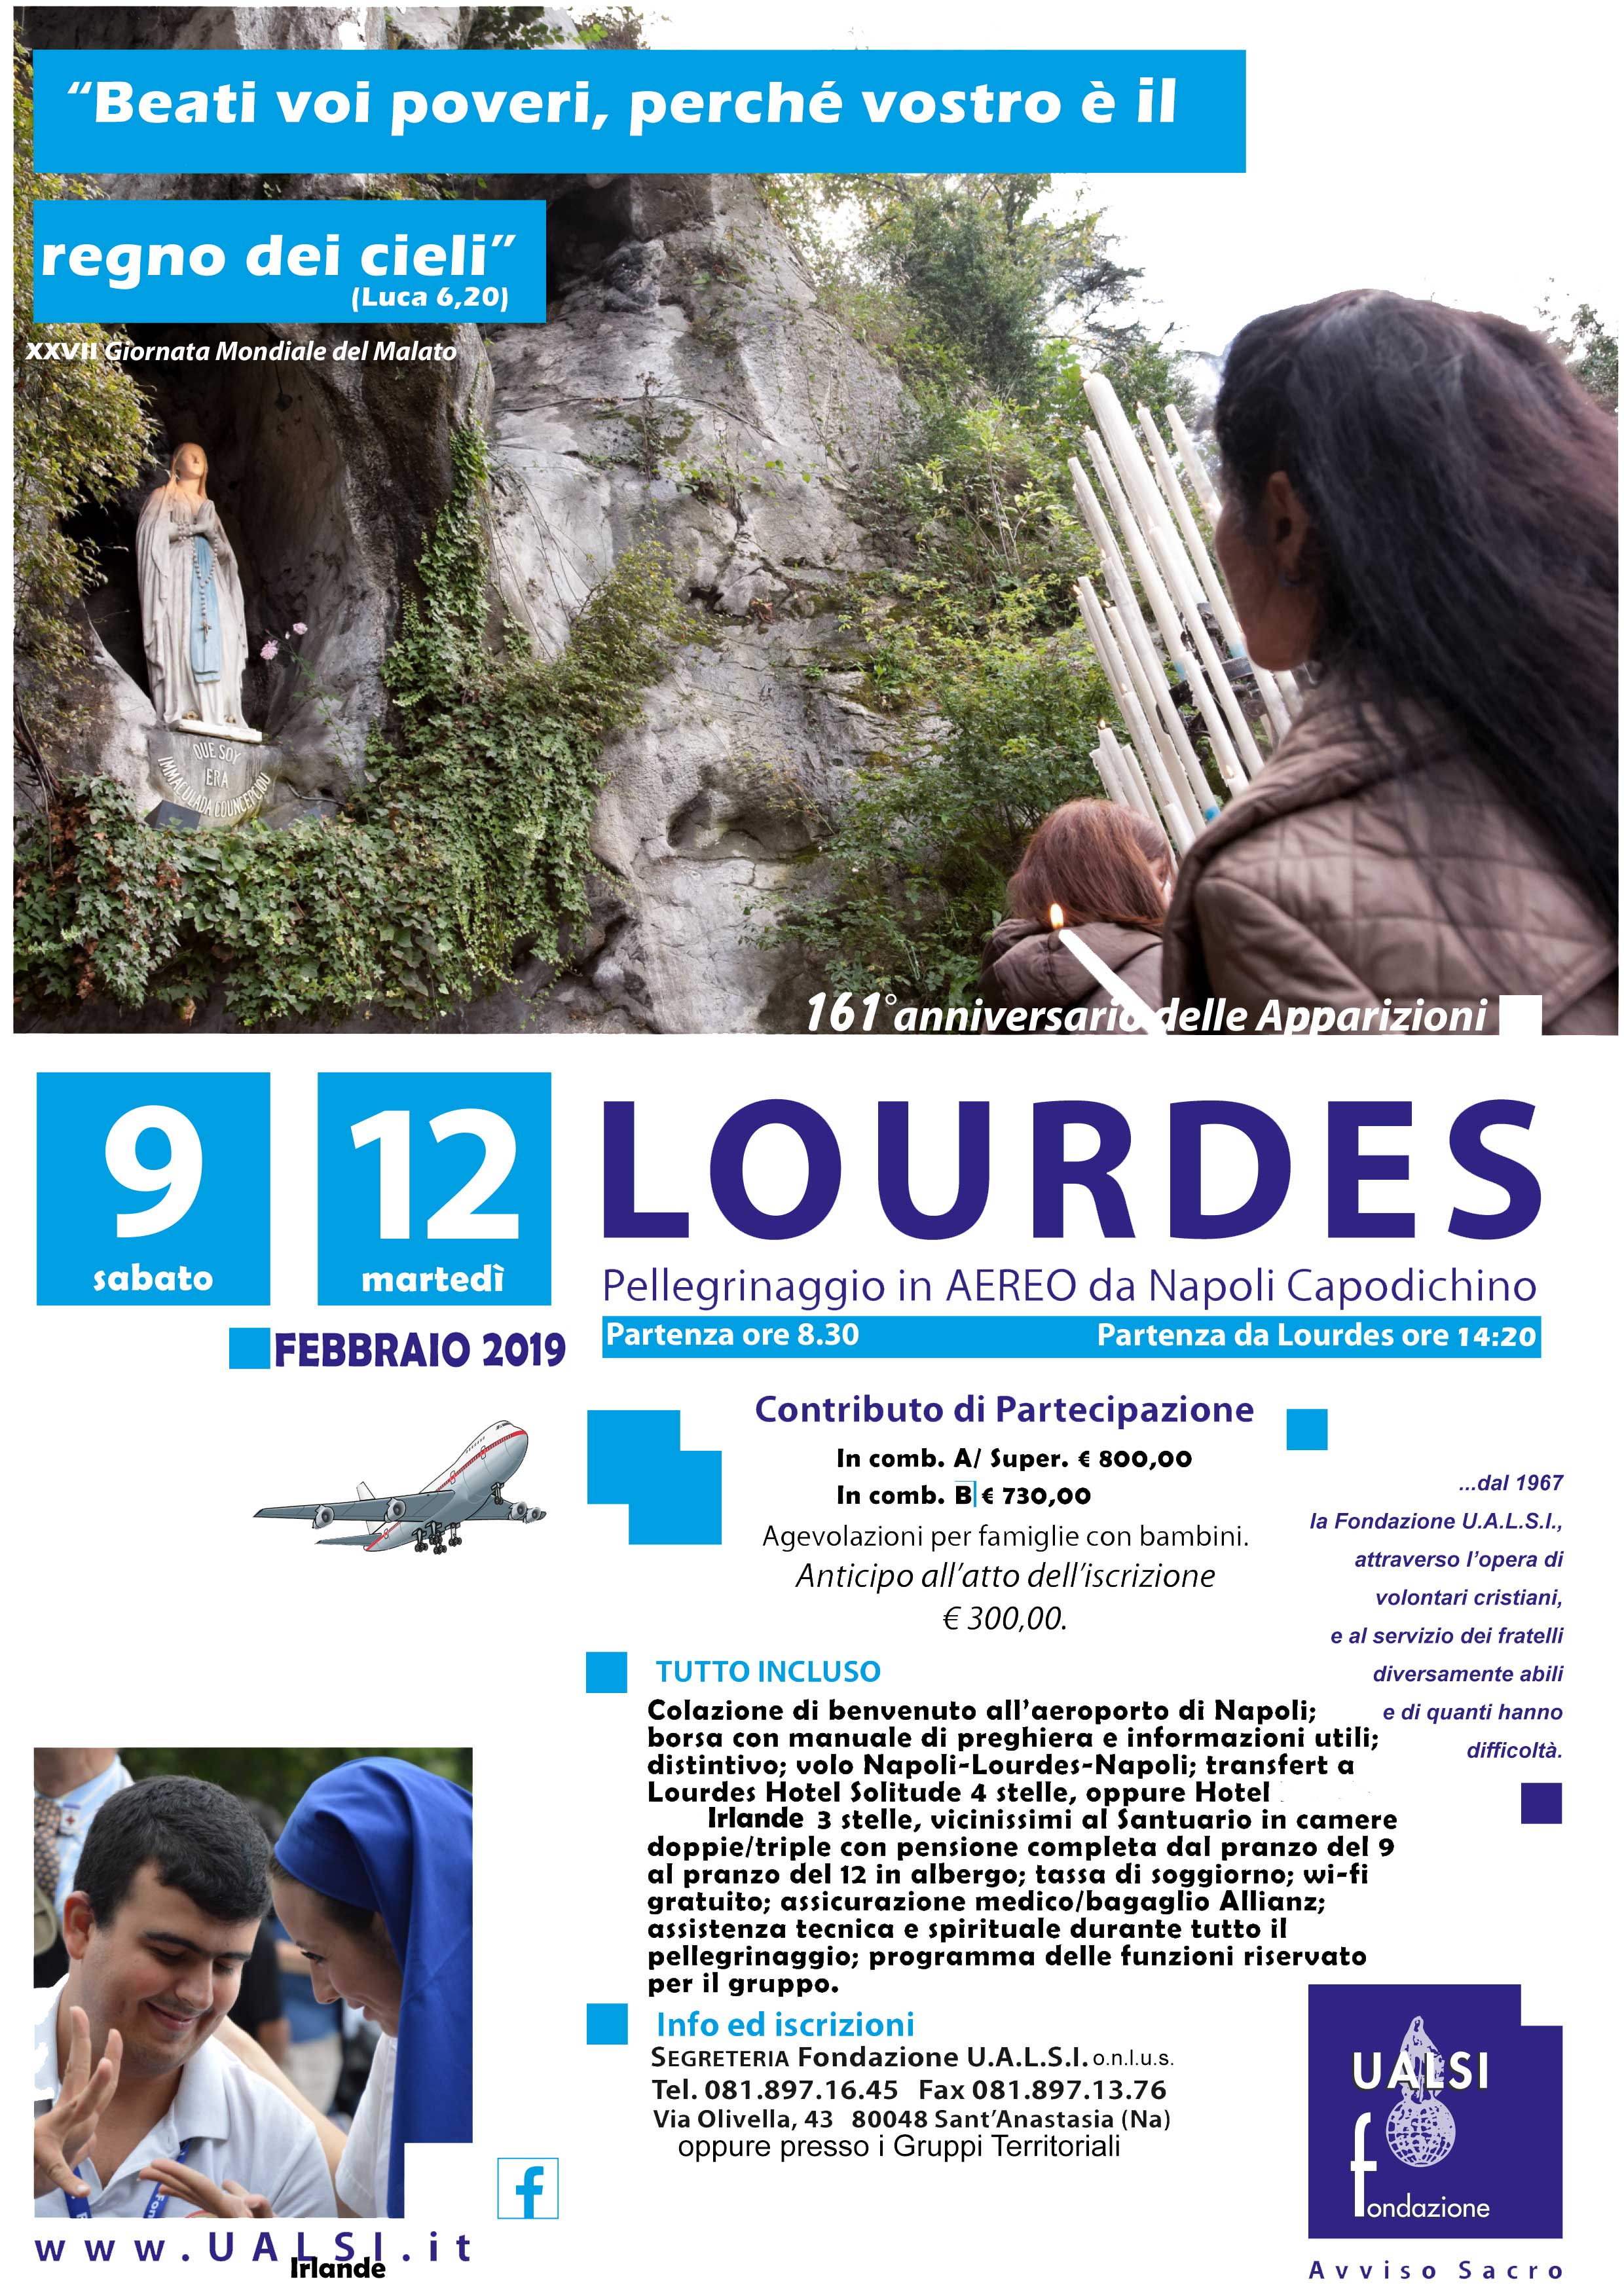 Pellegrinaggio Lourdes 9-12 Febbraio 2019